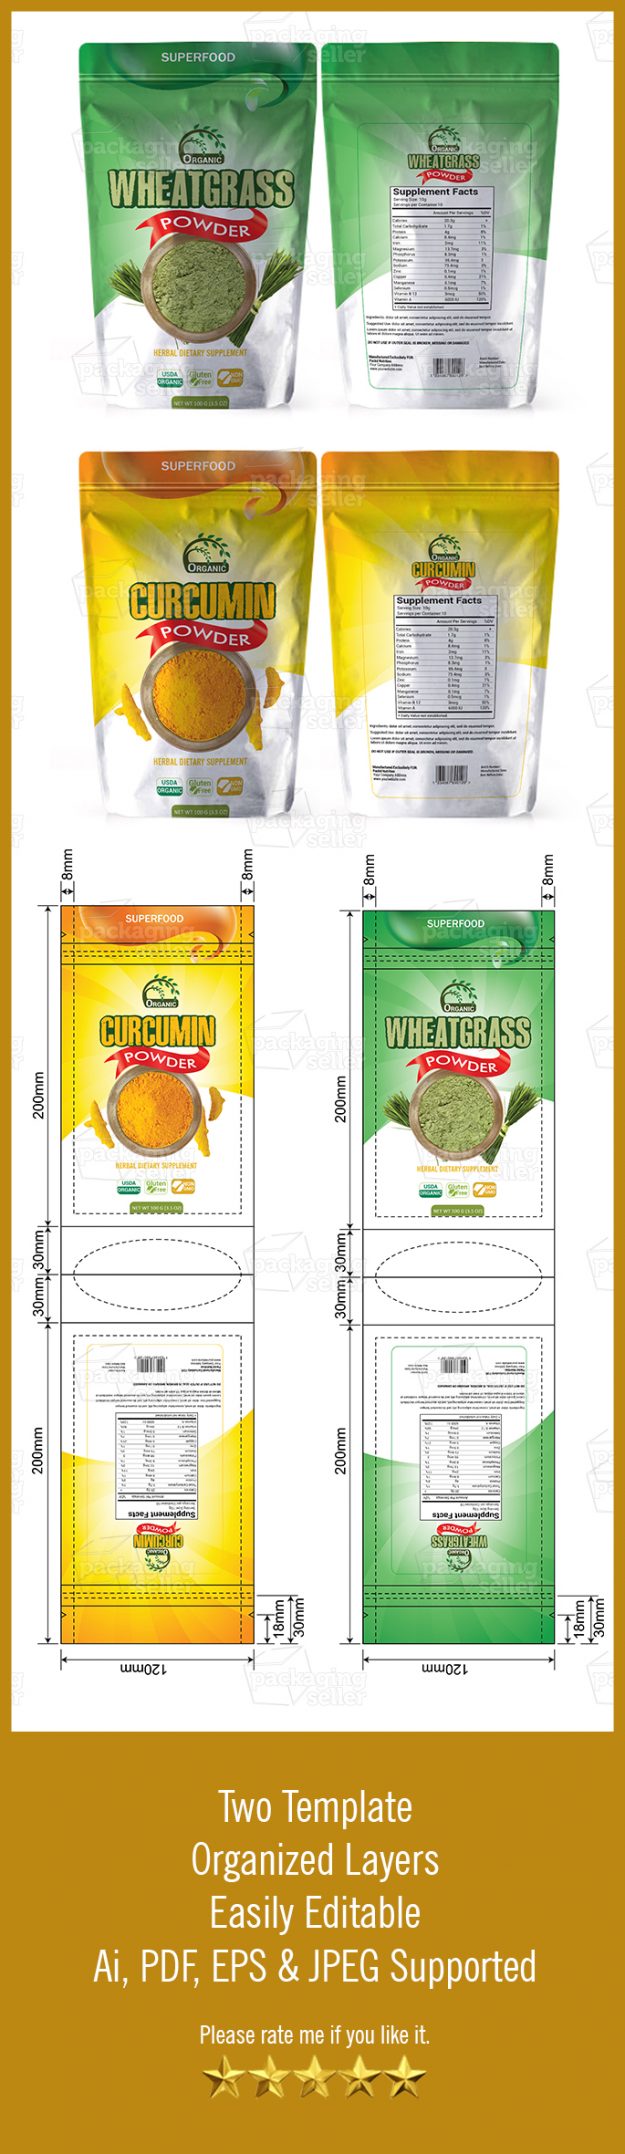 Wheatgrass Powder Packaging Template